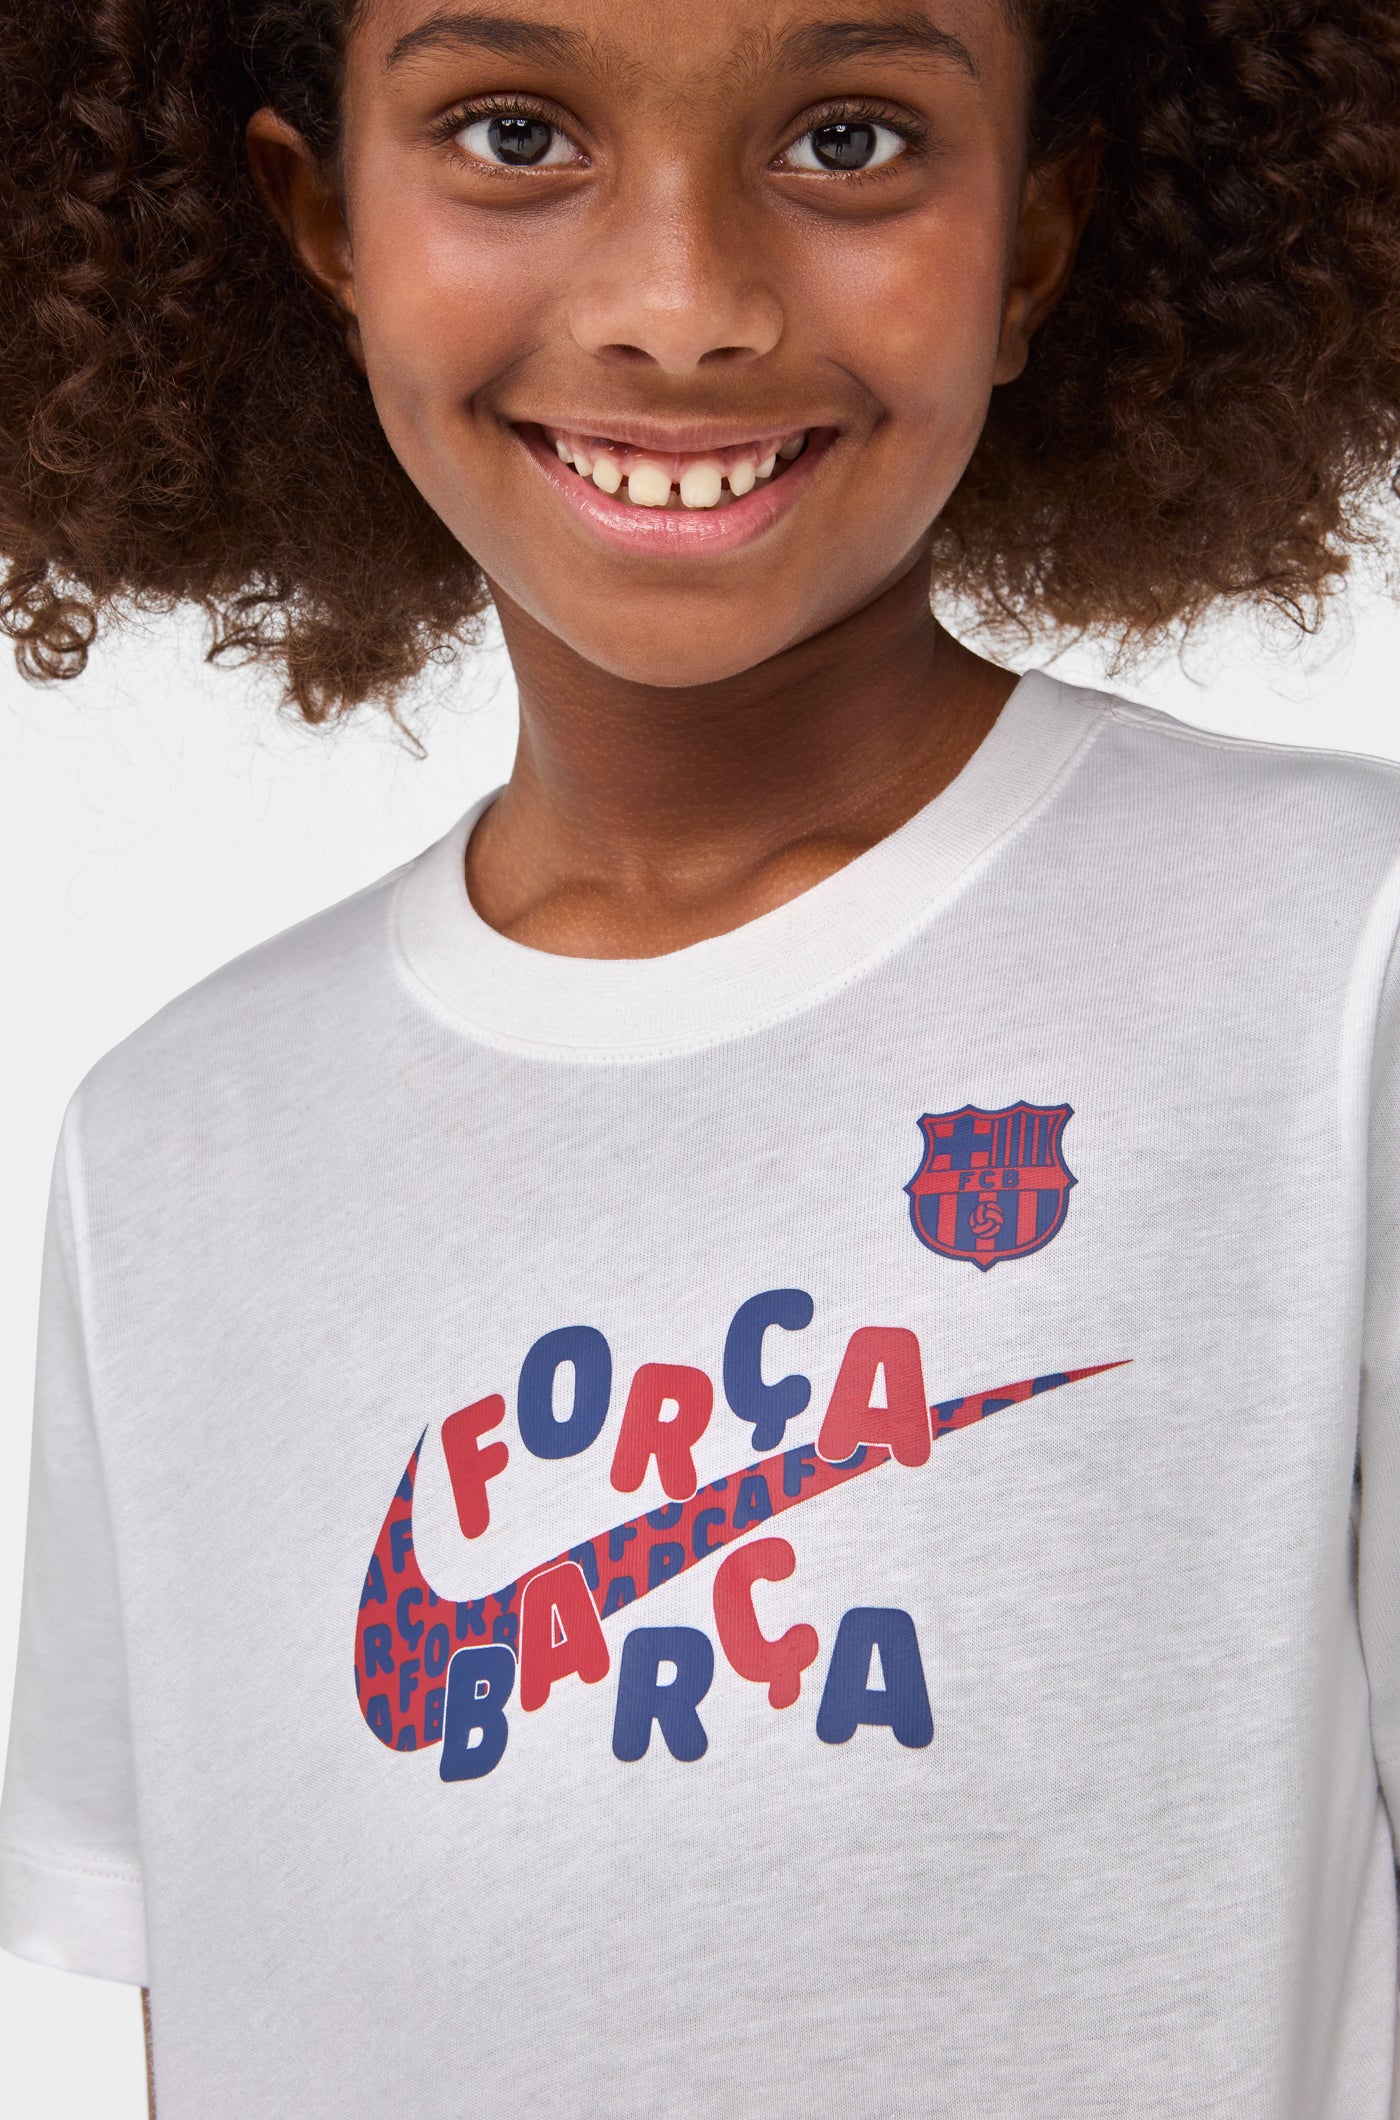 Camiseta blanca Barça Nike – Barça Official Store Spotify Camp Nou